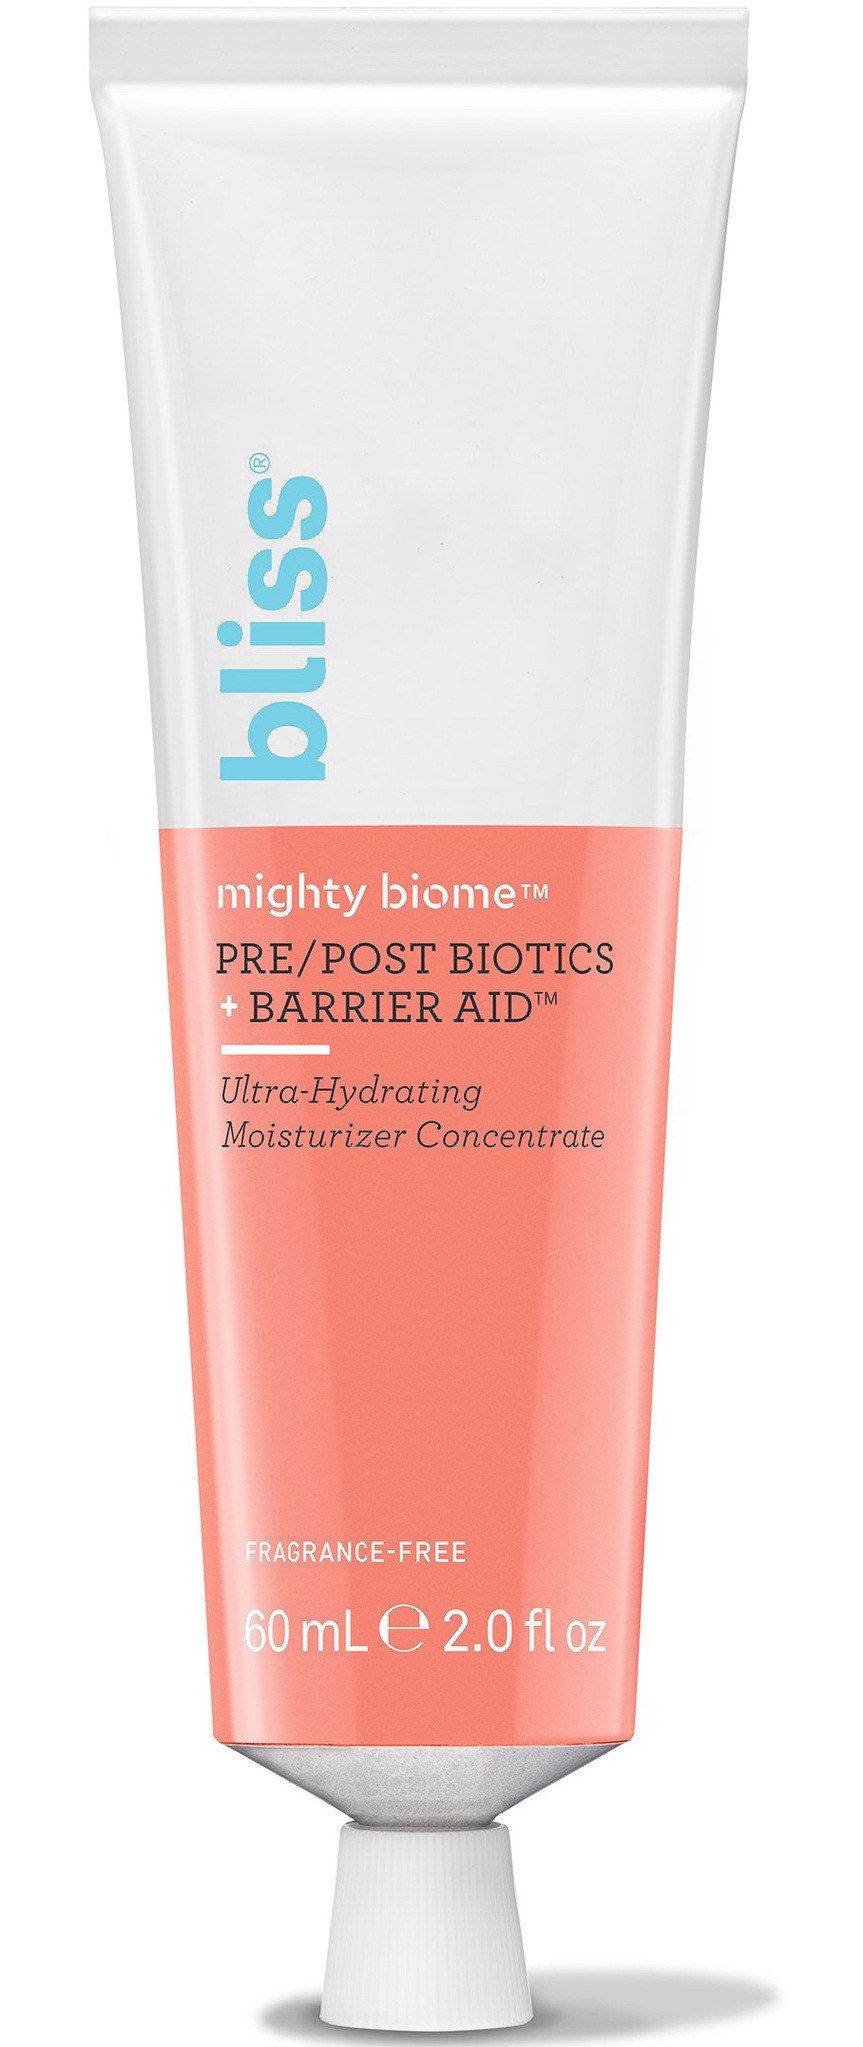 Bliss Mighty Biome Pre/post Biotics + Barrier Aid™ Moisturizer